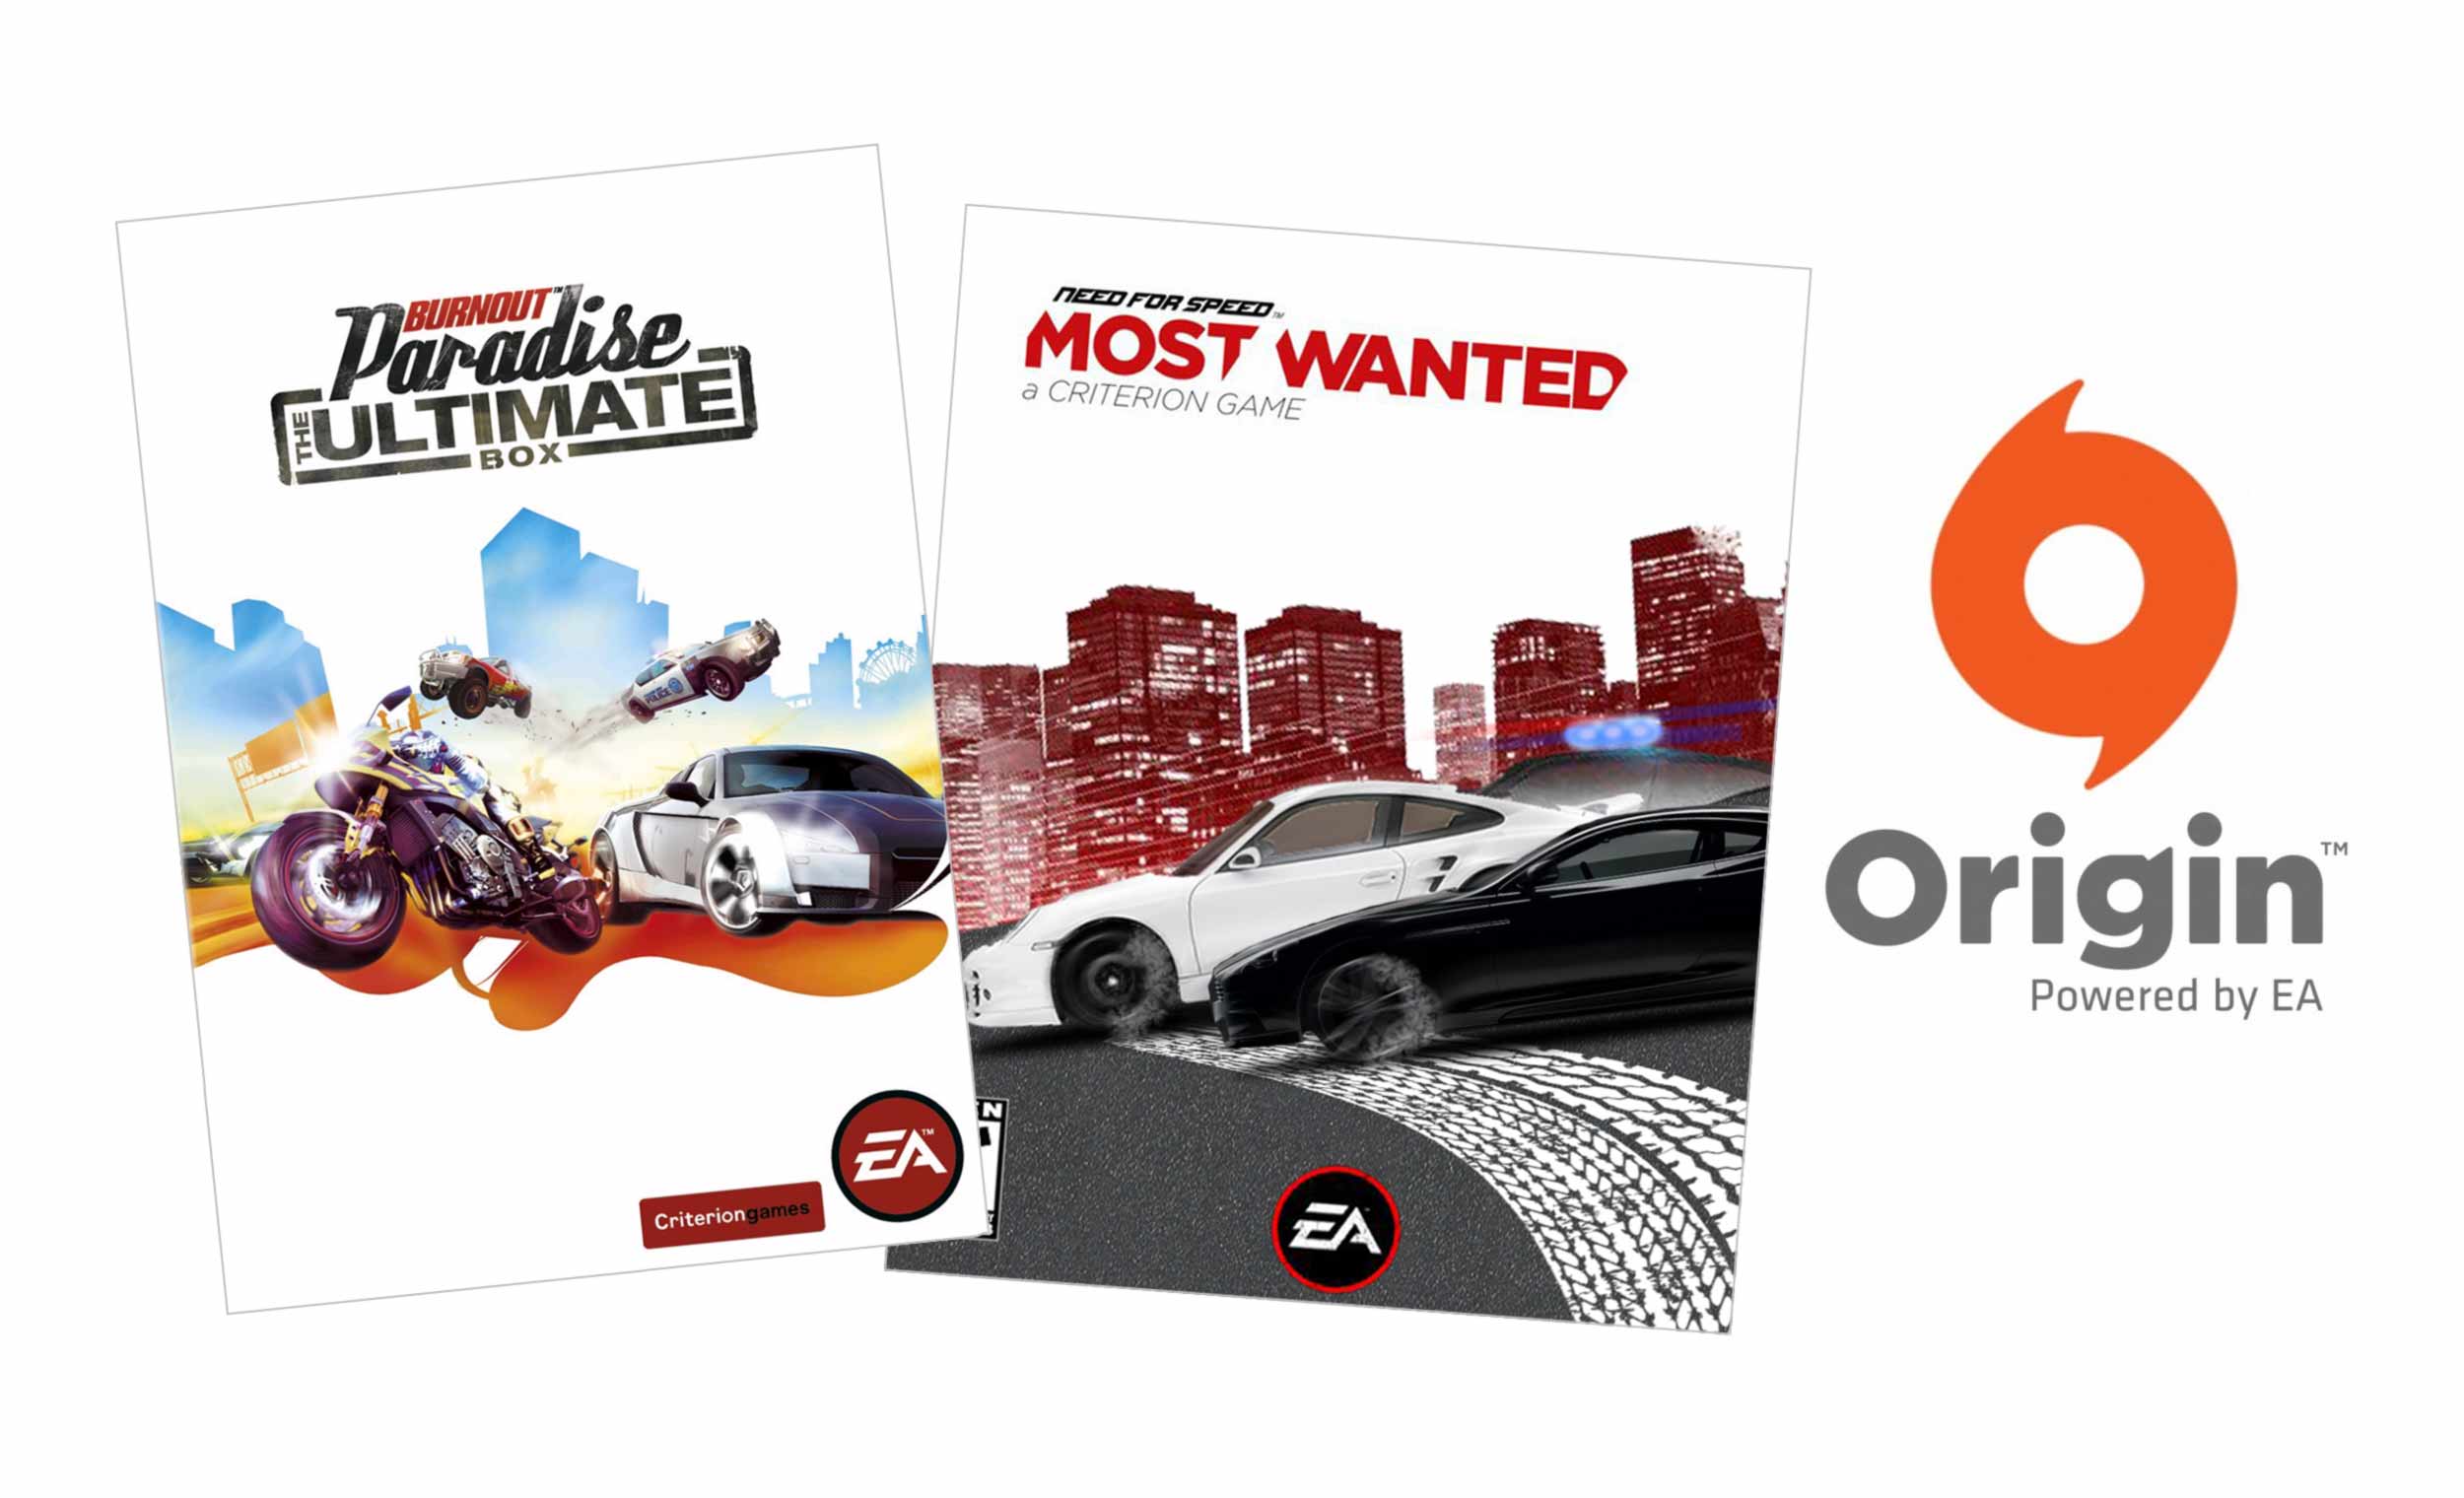 Buy Need for Speed, PC - EA Origin